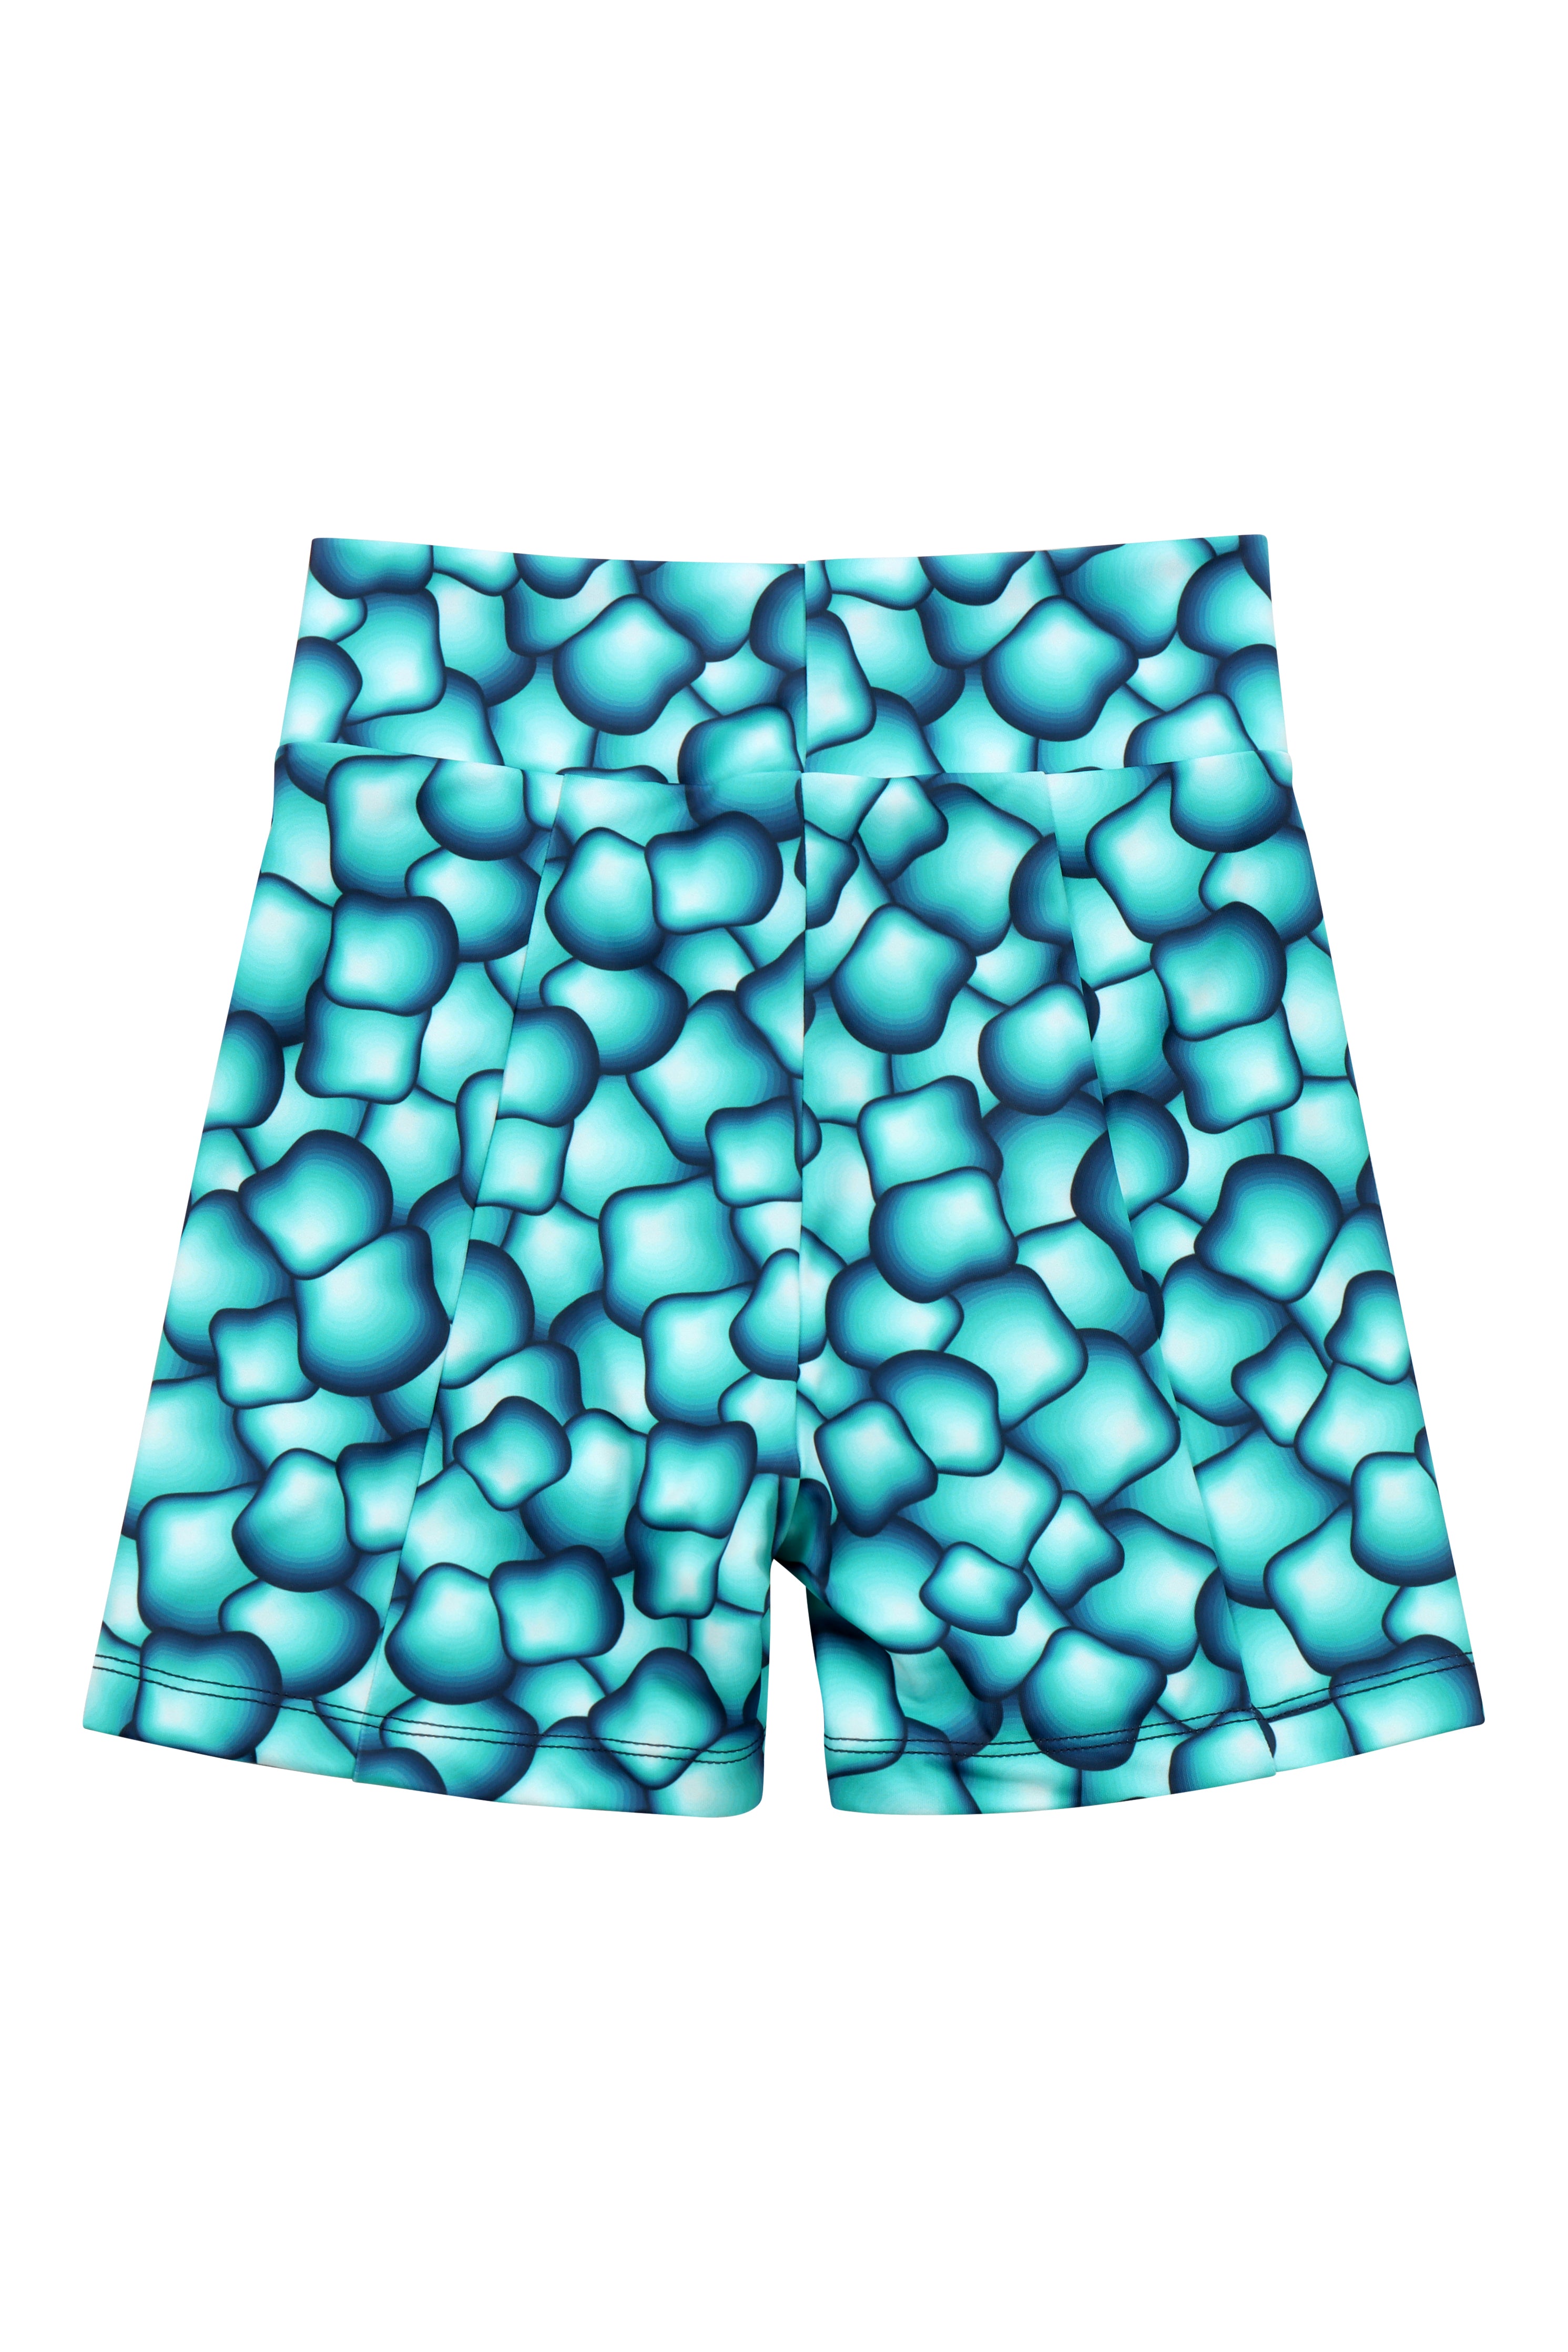 JOHNNY Swim Shorts in New Retro Print